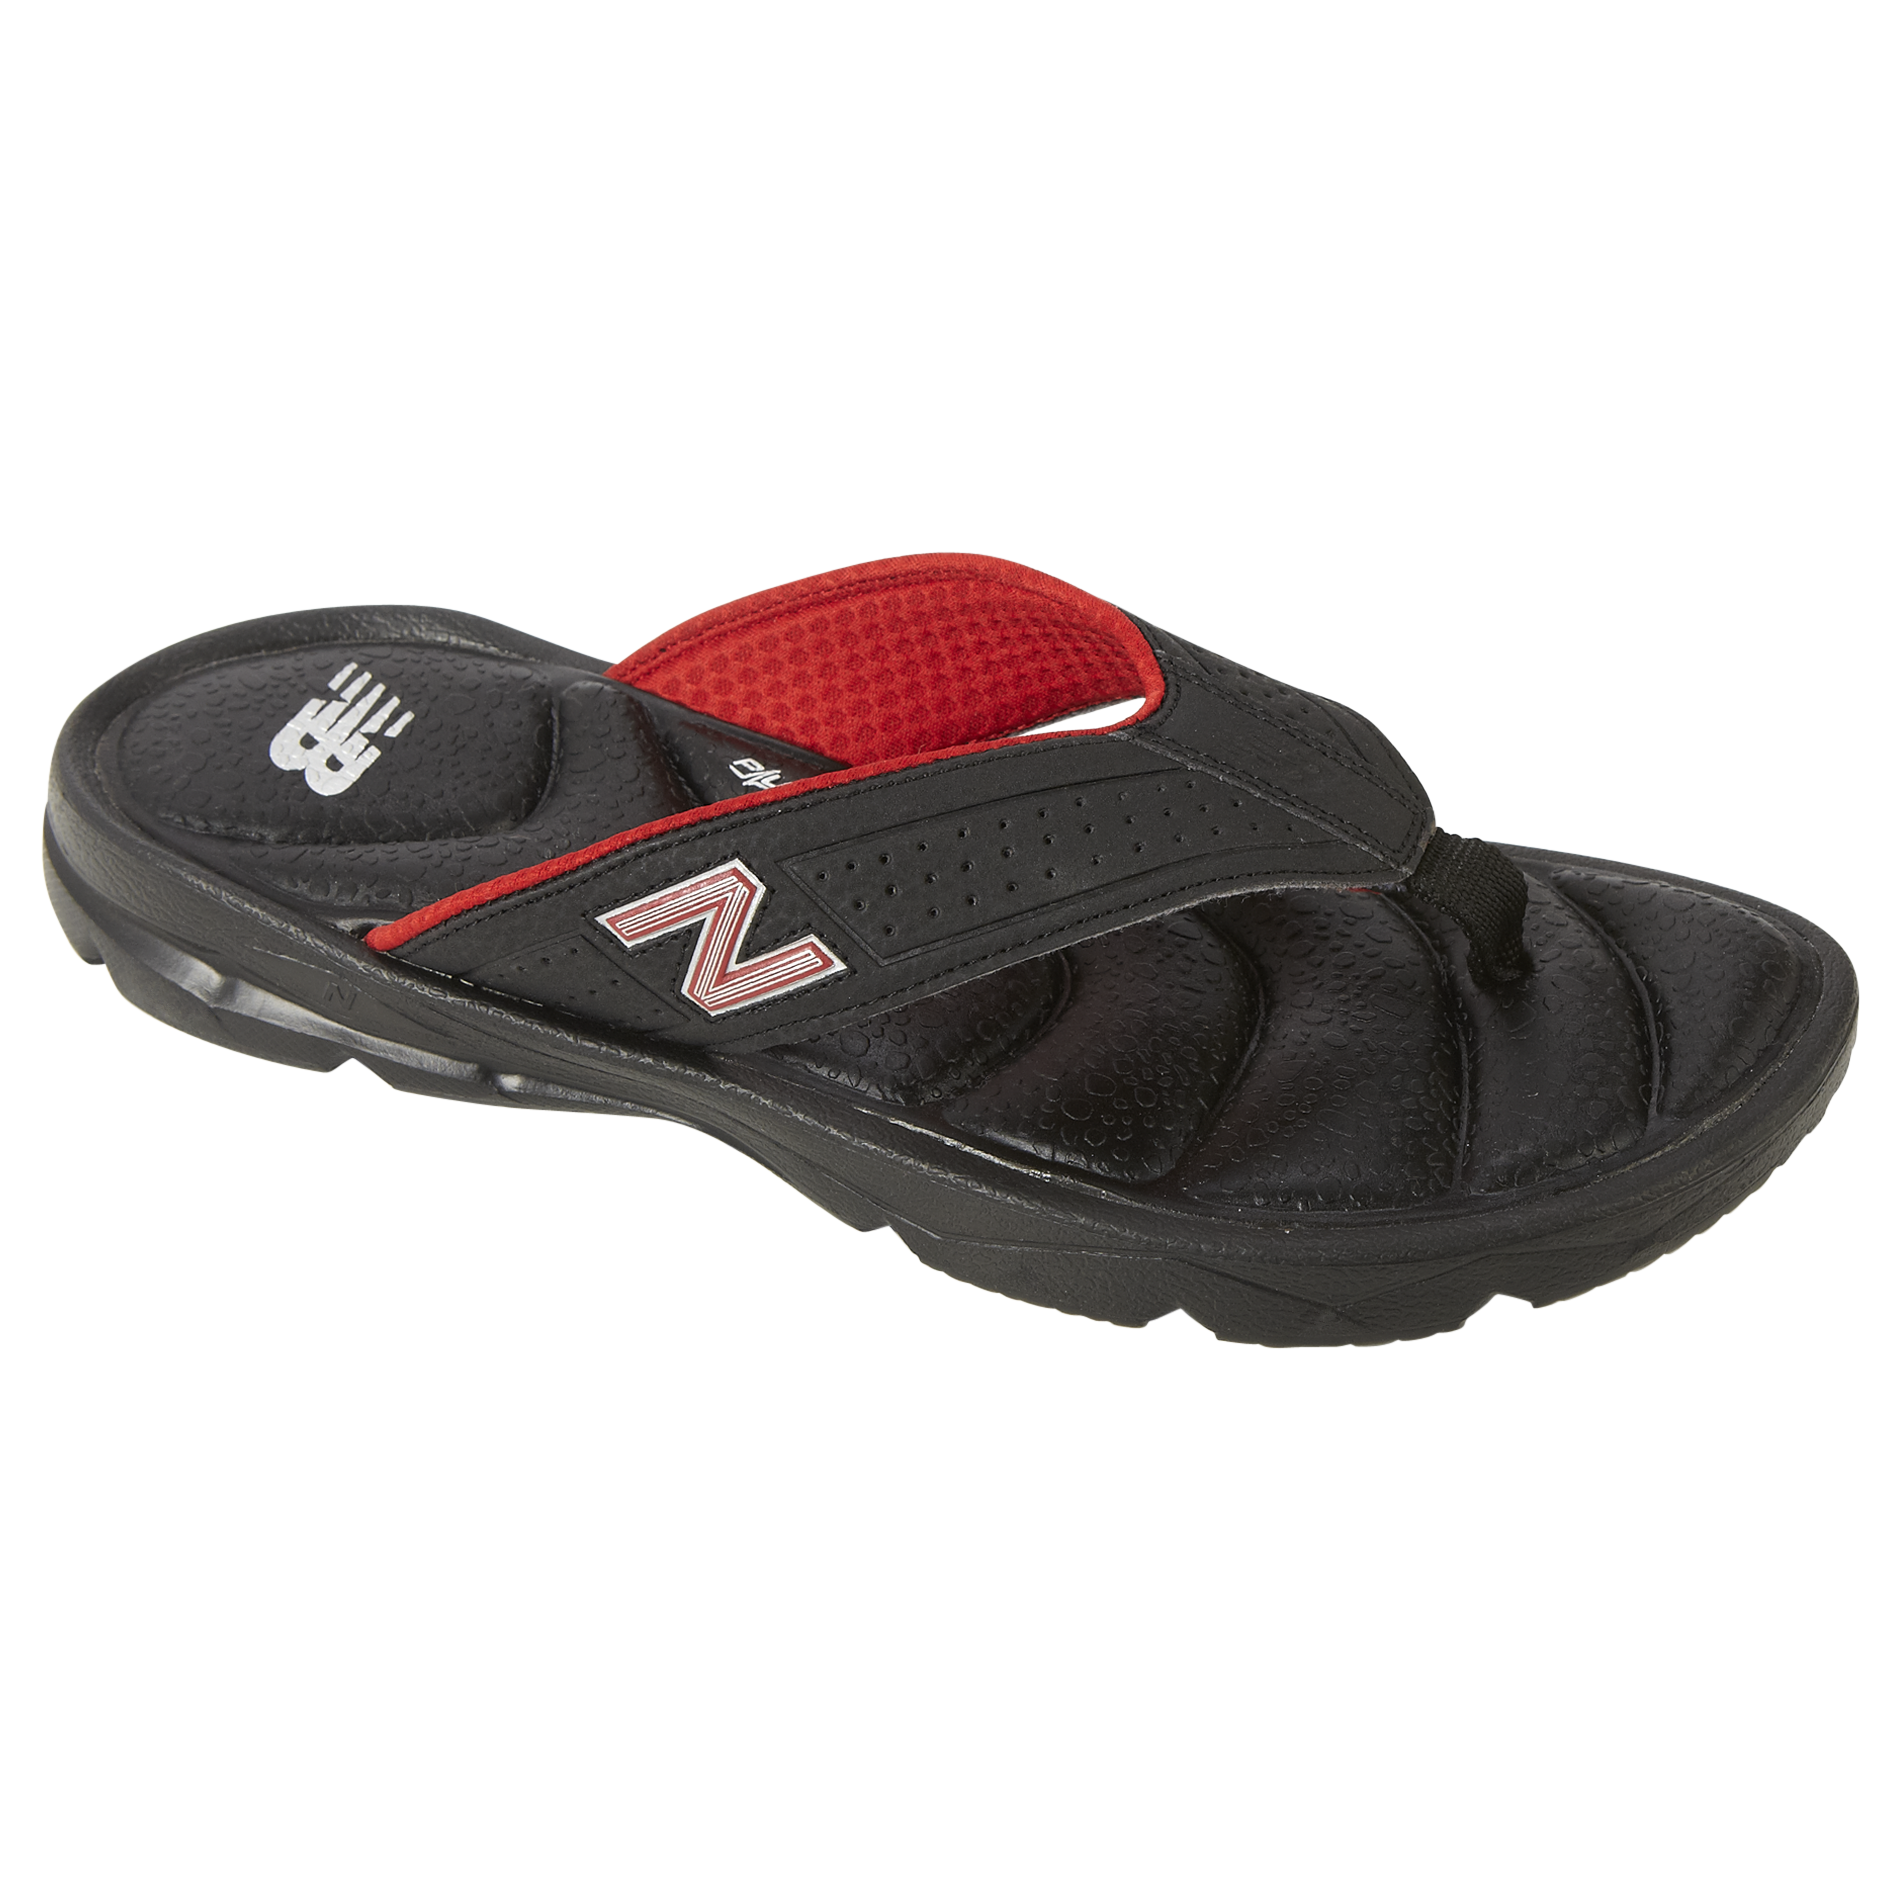 New Balance Men's Rev Plush H20 Athletic Sandal - Black/Red